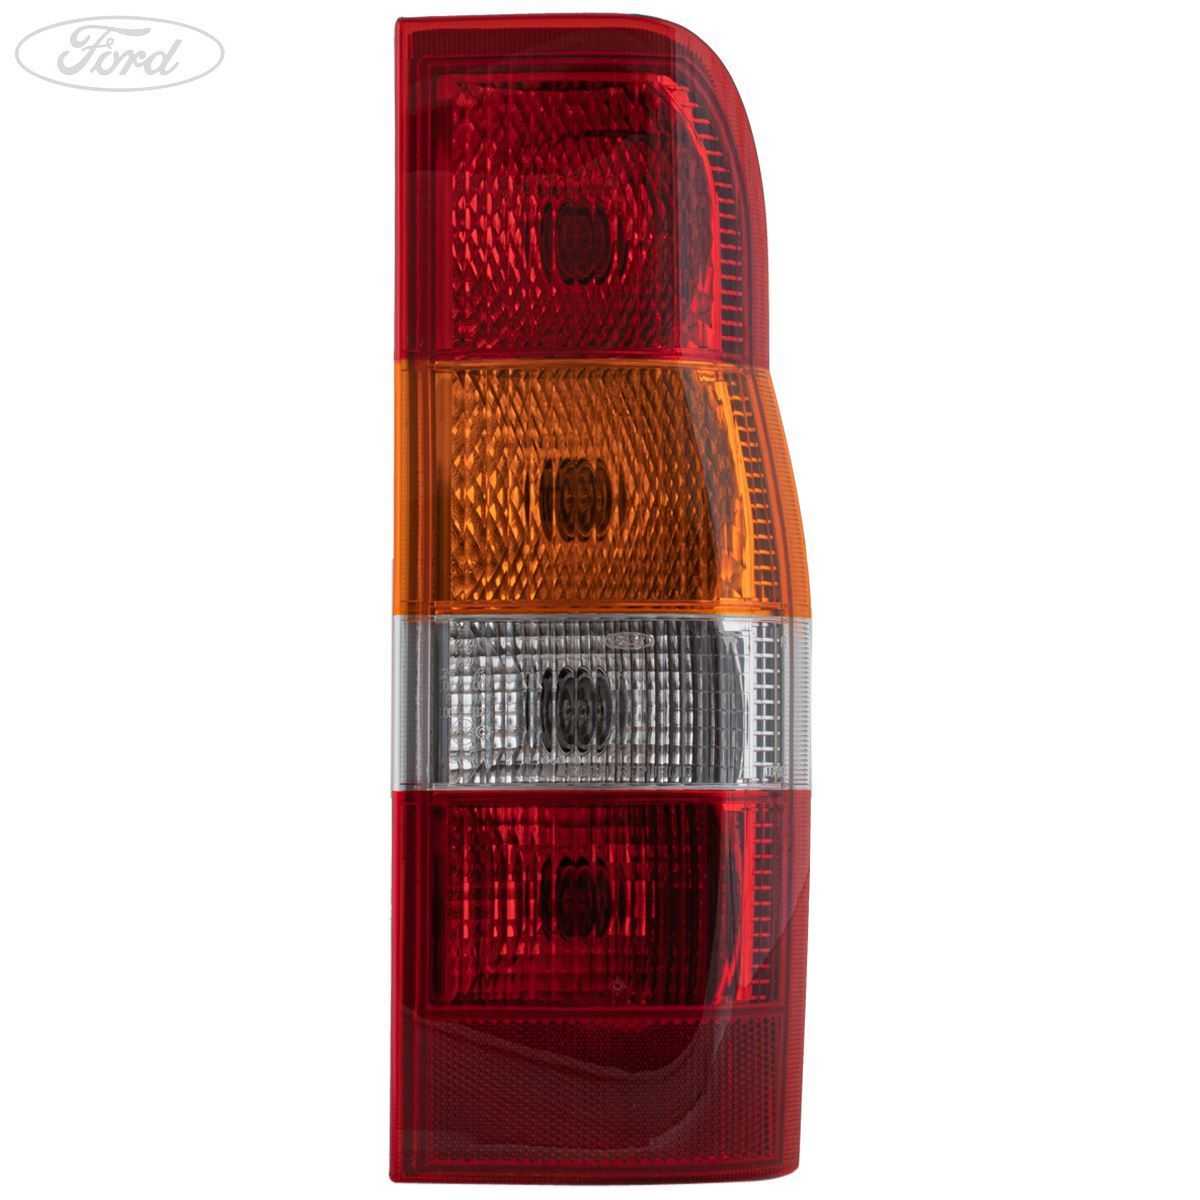 Ford, TRANSIT MK6 REAR RIGHT DRIVER SIDE TAIL LIGHT BRAKE LAMP CLUSTER